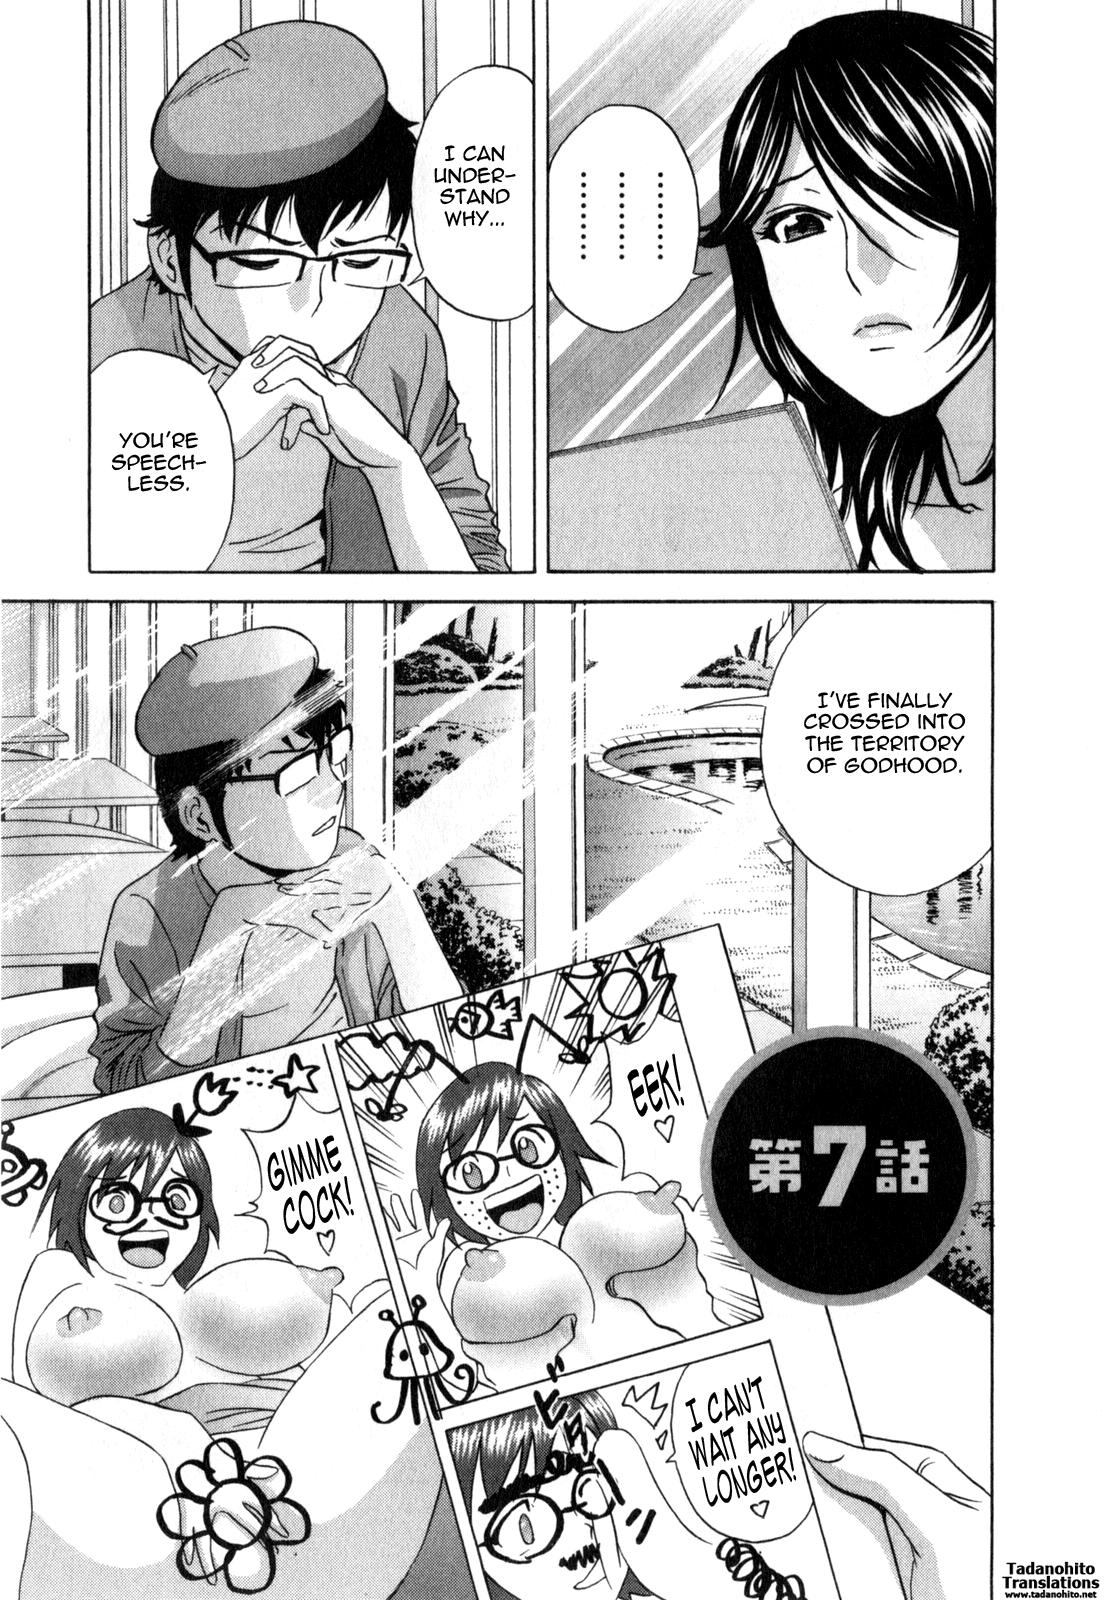 [Hidemaru] Life with Married Women Just Like a Manga 3 - Ch. 1-7 [English] {Tadanohito} 126